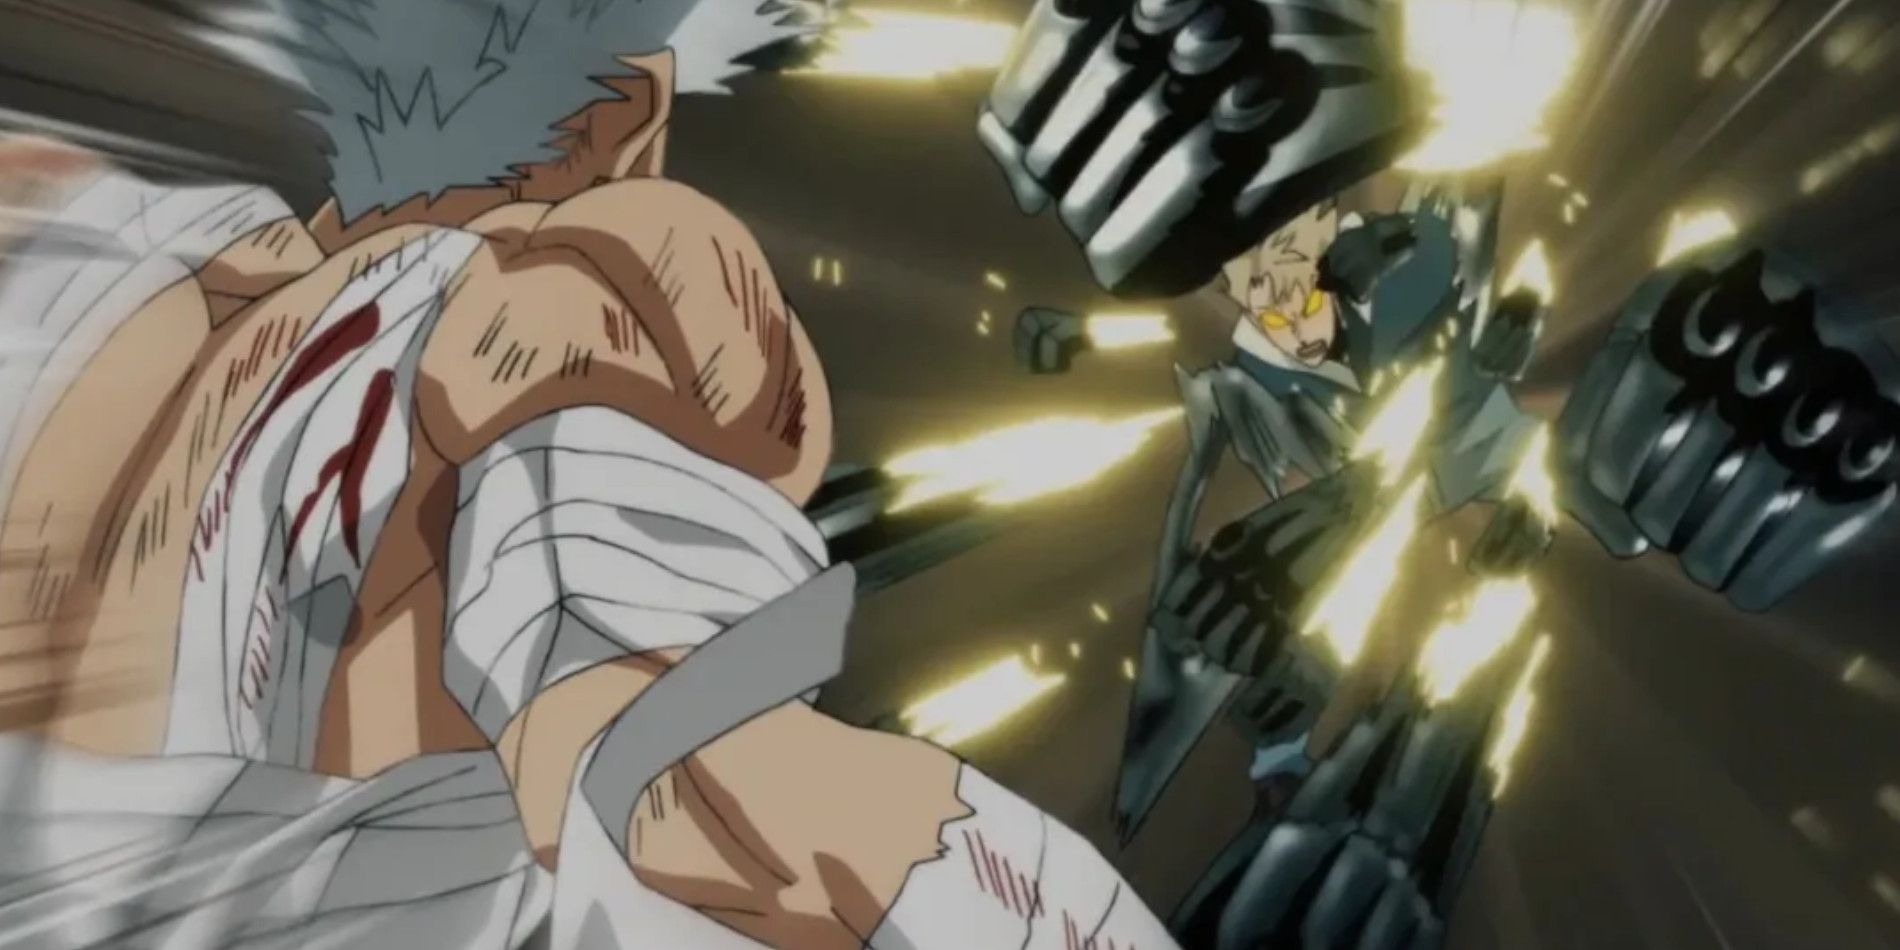 Genos using his machine gun punch in One Punch Man